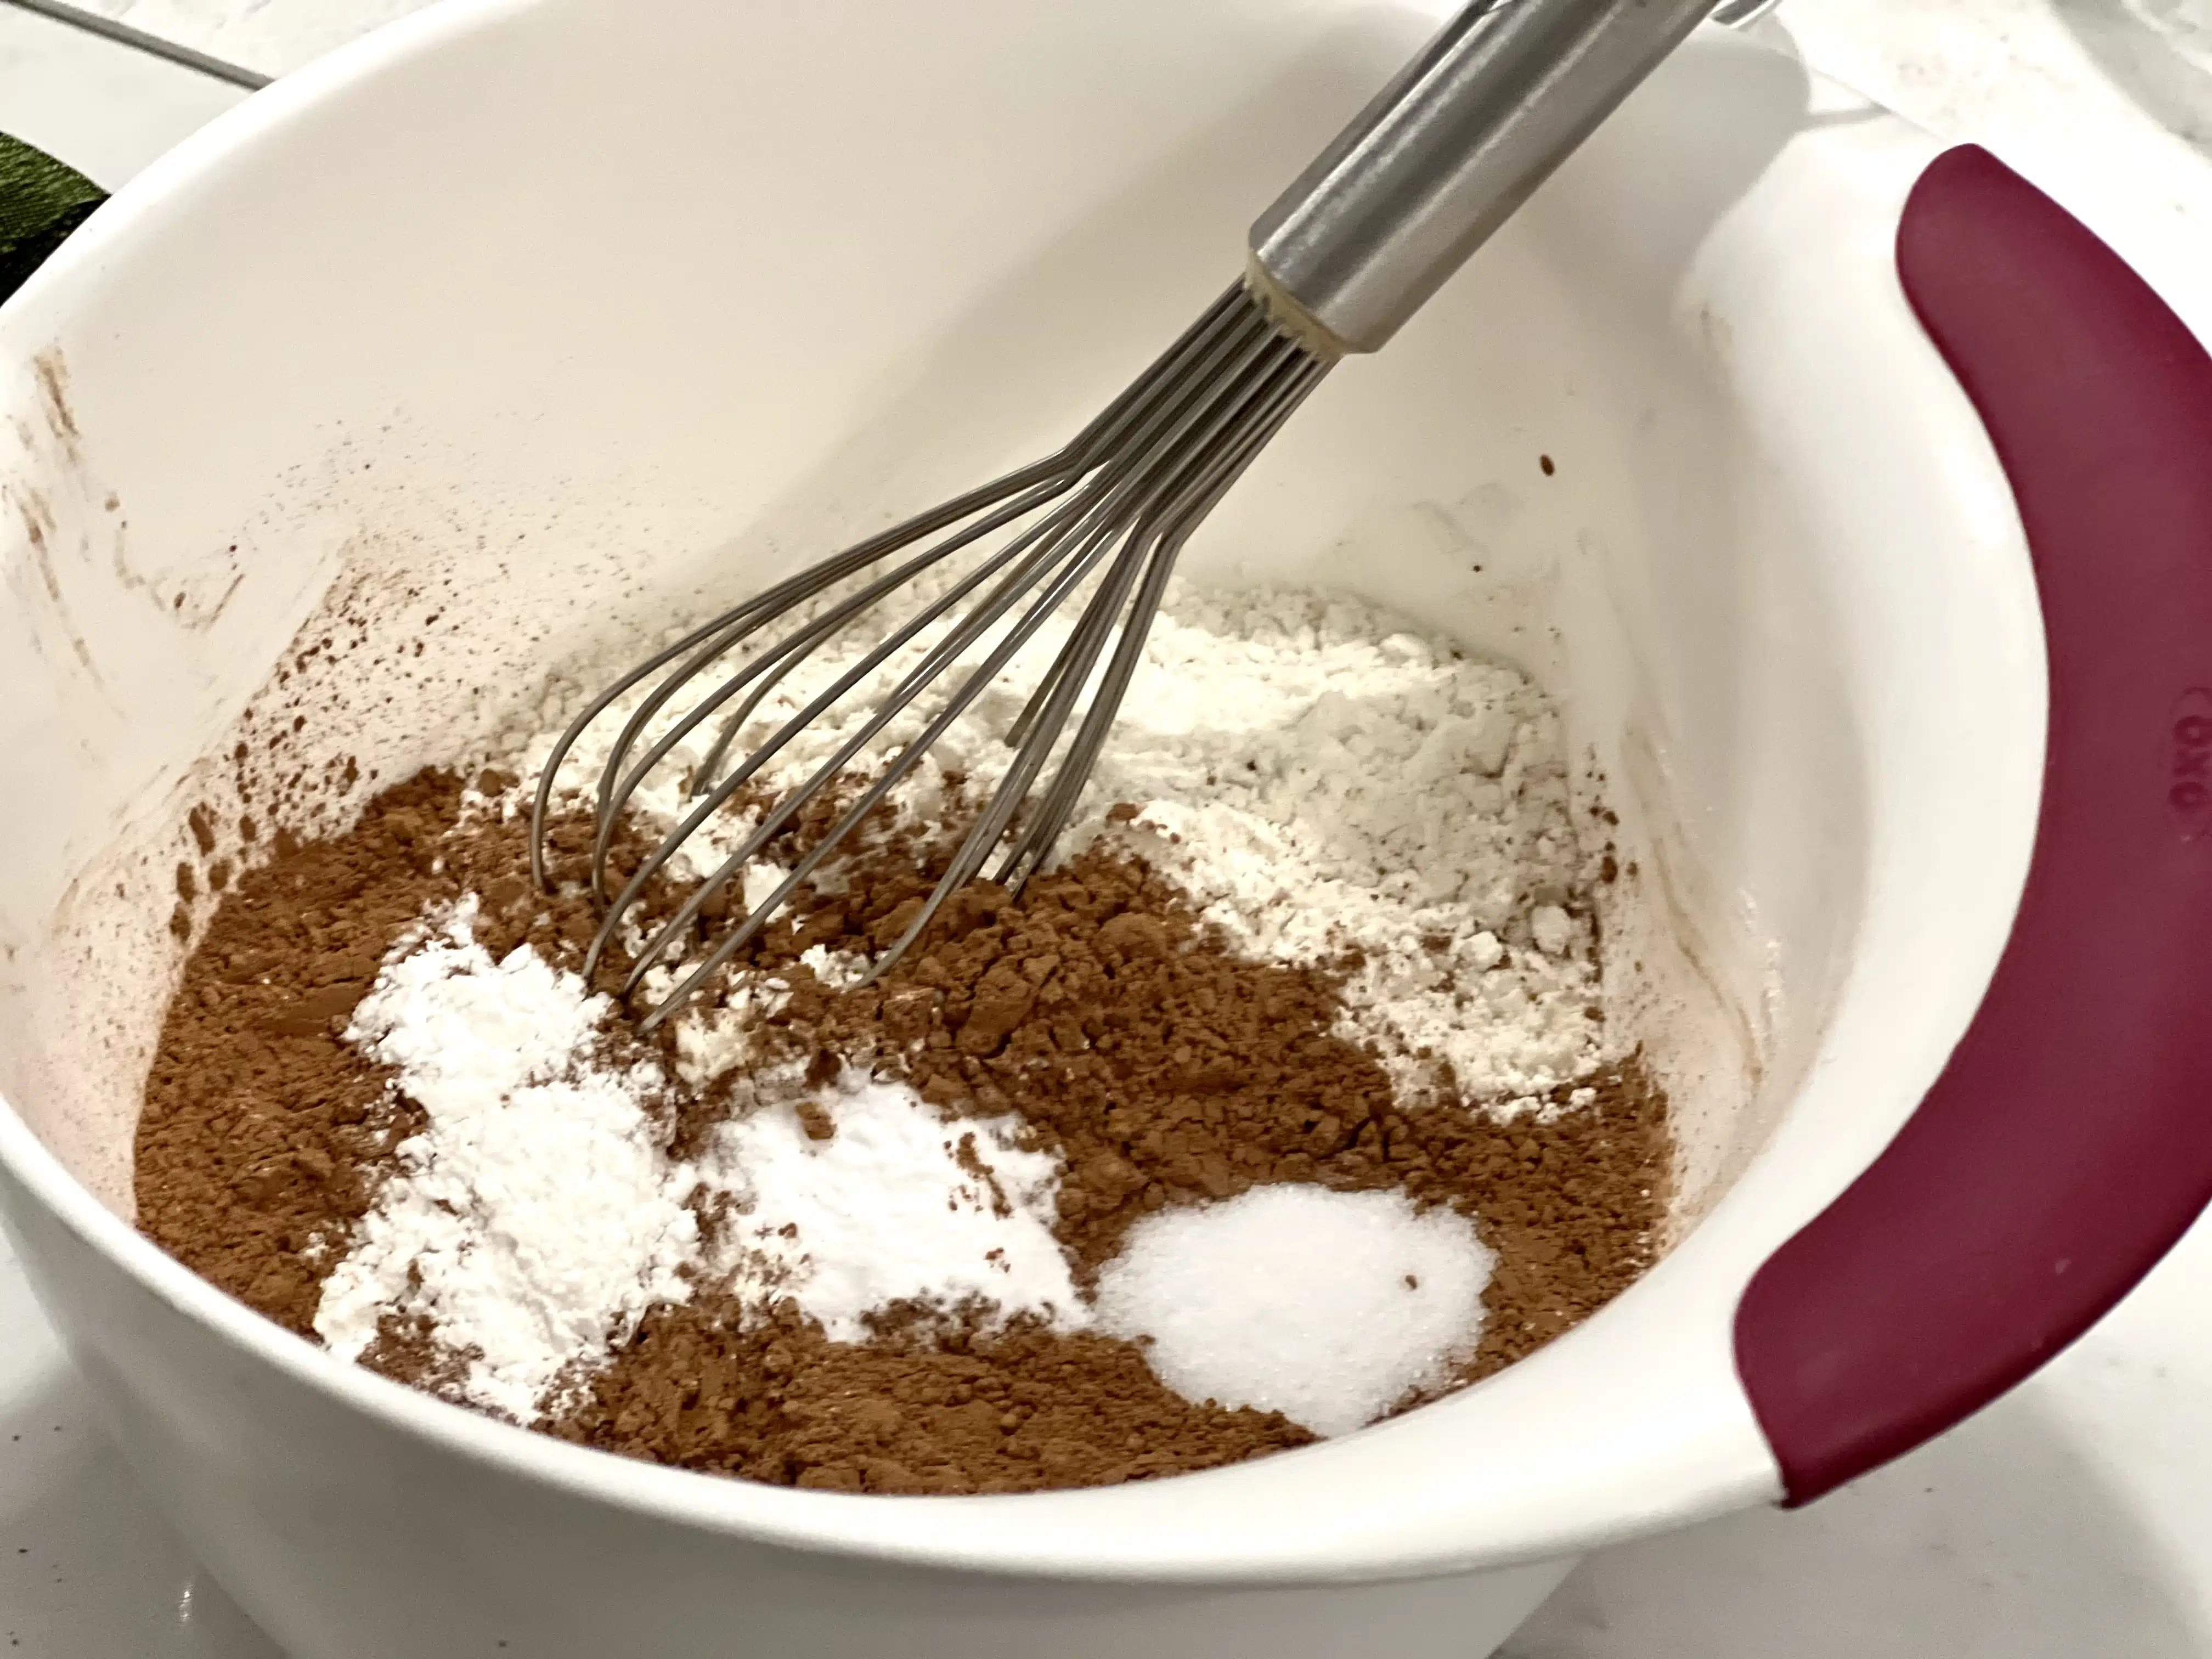 flour, cocoa powder, salt, baking powder and baking soda in a bowl